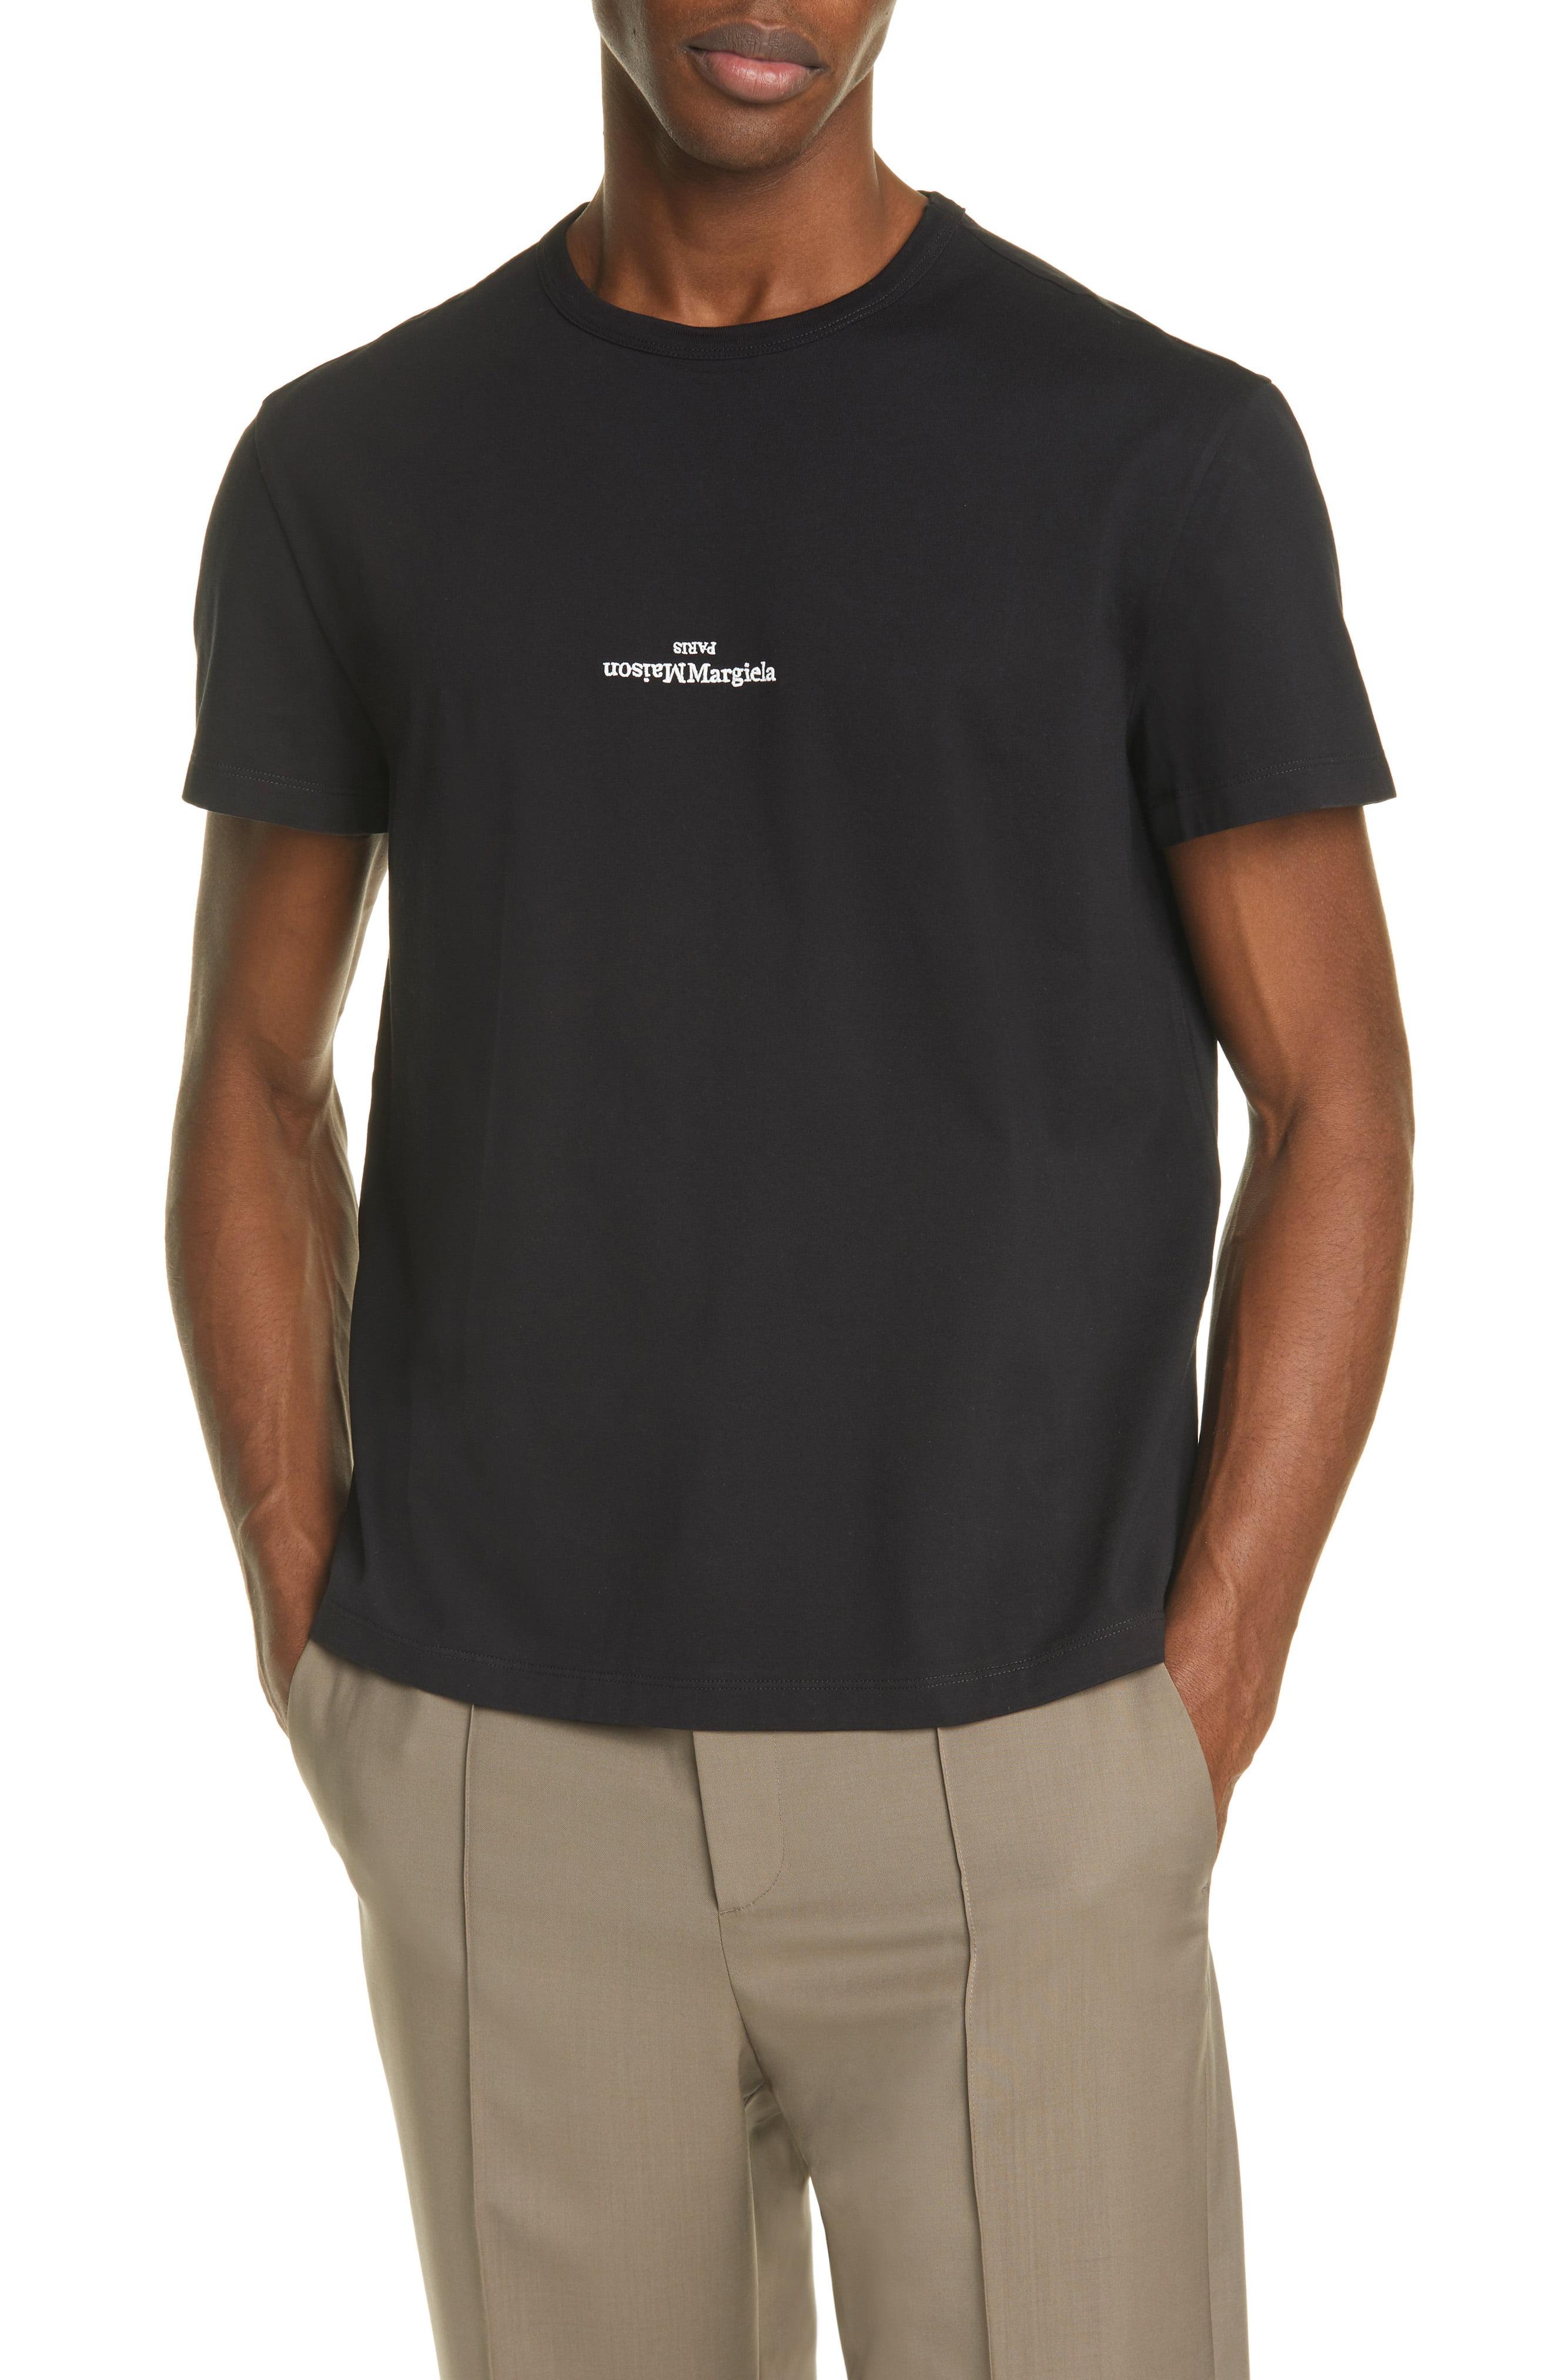 Maison Margiela Crewneck T-shirt in Black for Men - Lyst